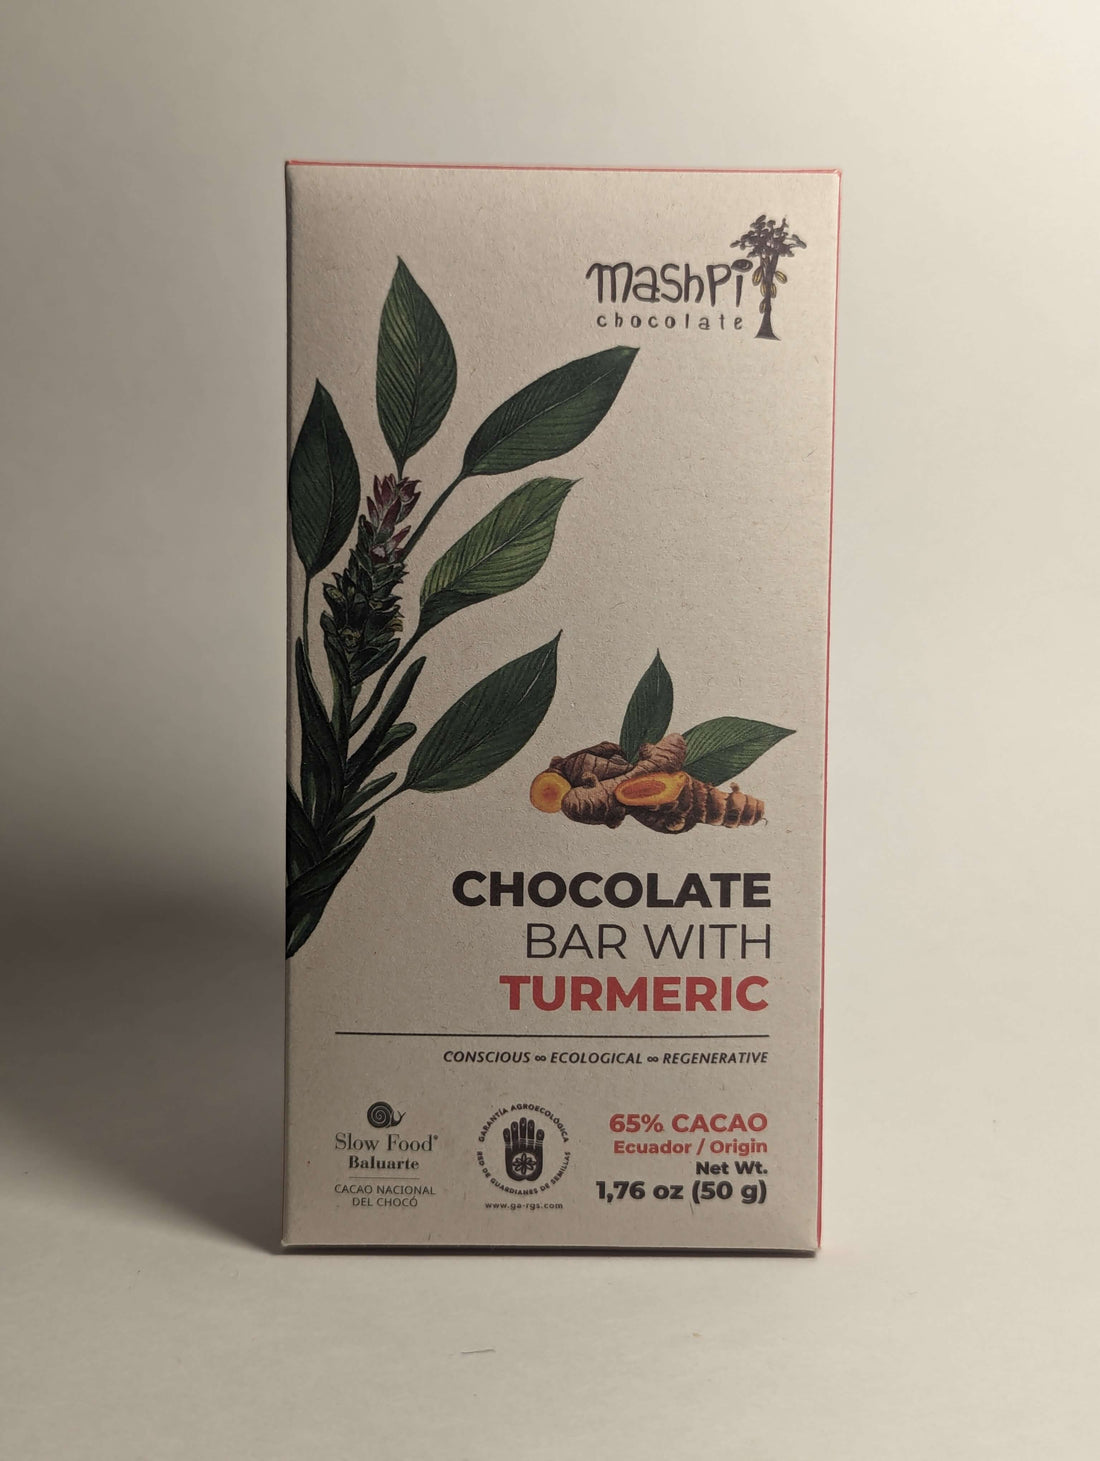 Turmeric Chocolate bar - Mashpi Chocolate 